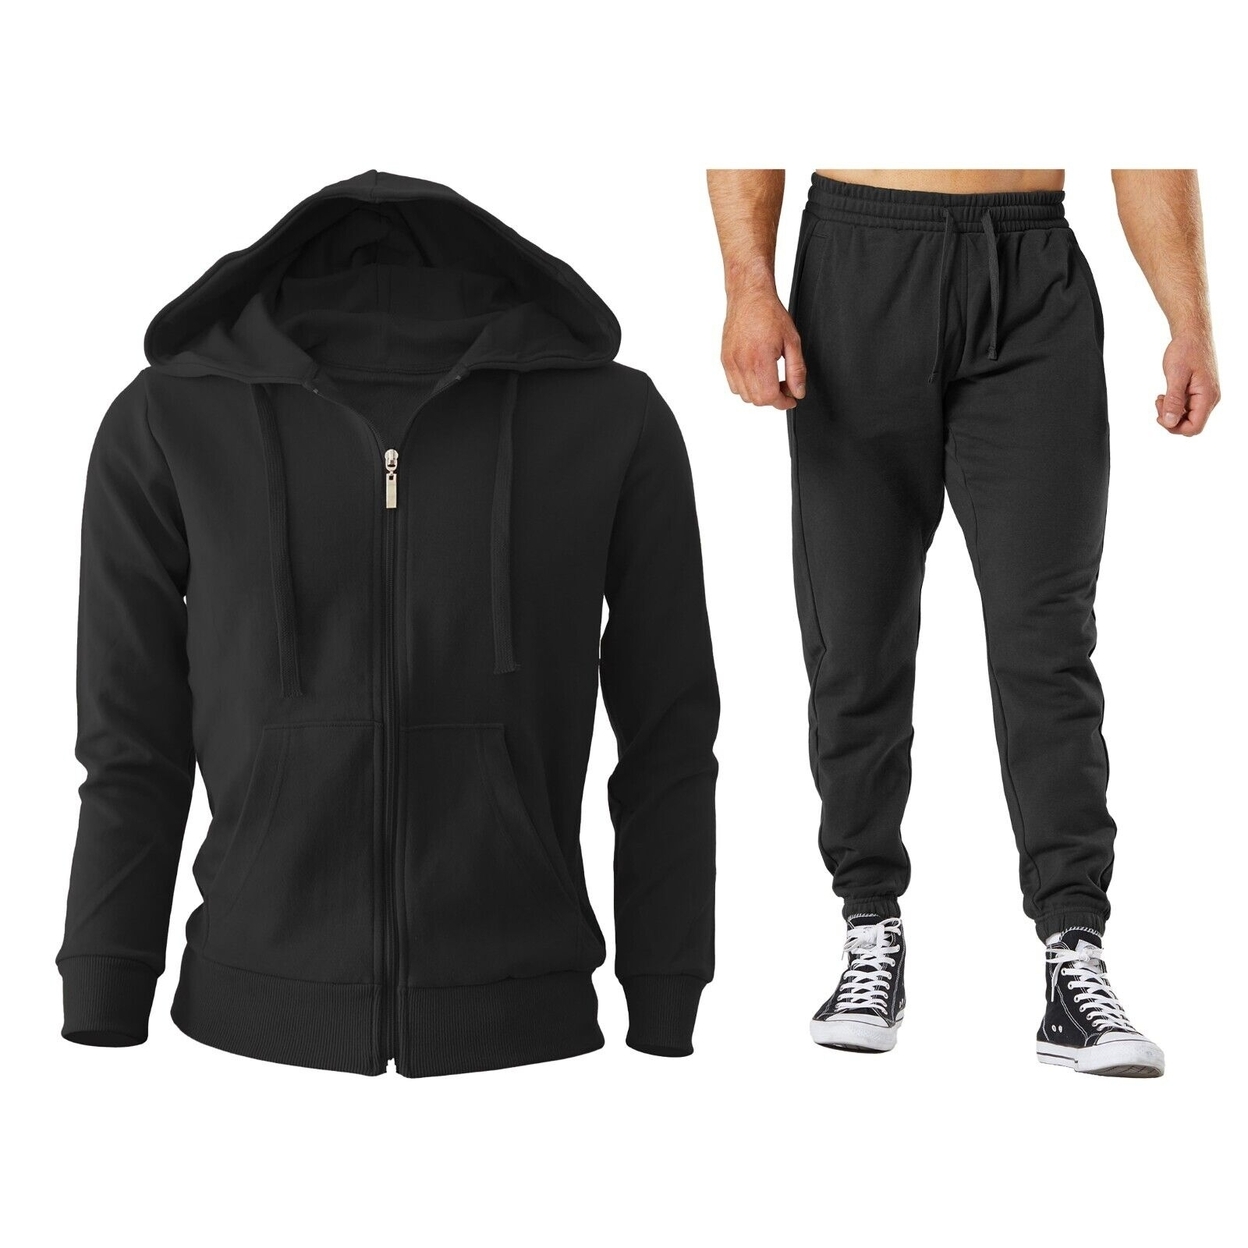 2-Piece: Men's Winter Warm Cozy Athletic Multi-Pockets BIG & TALL Sweatsuit Set - Black, Xx-large